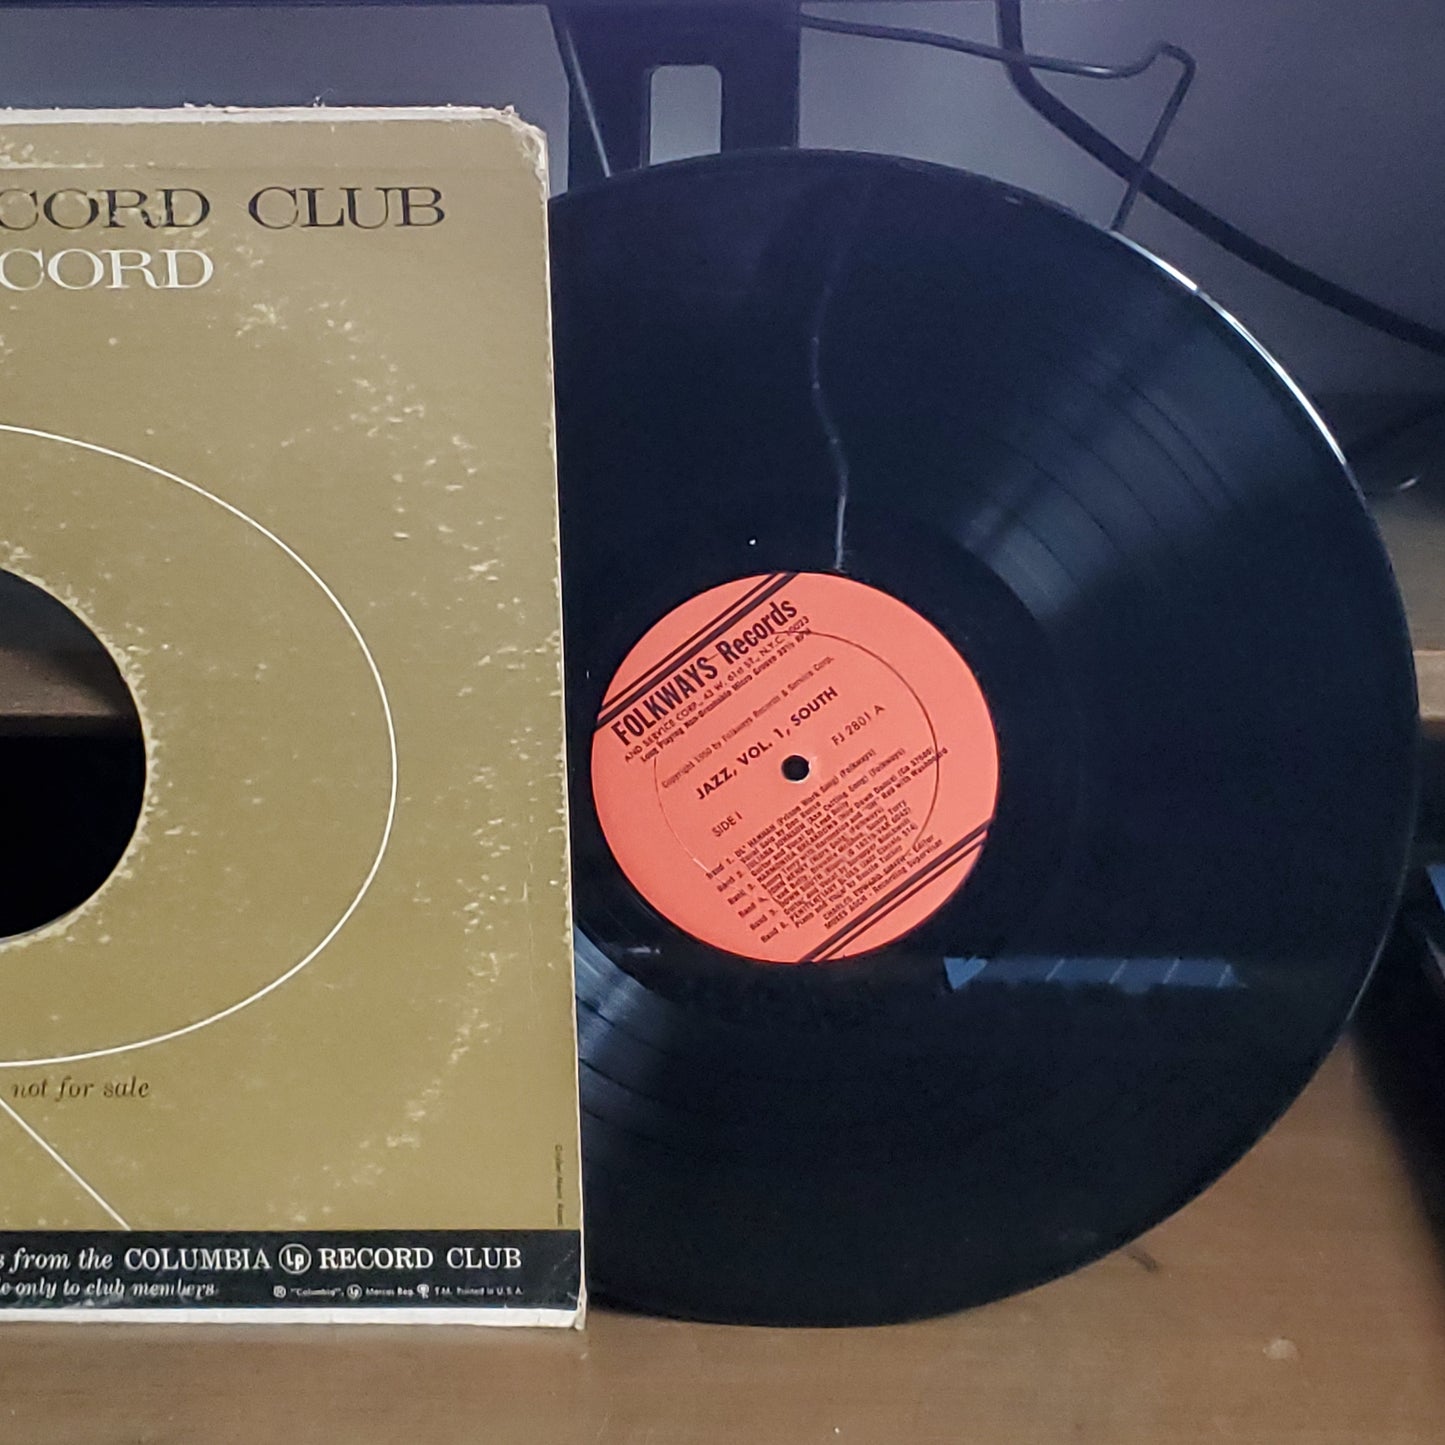 Columbia Record Club Bonus Record Limited Edition By Columbia Records